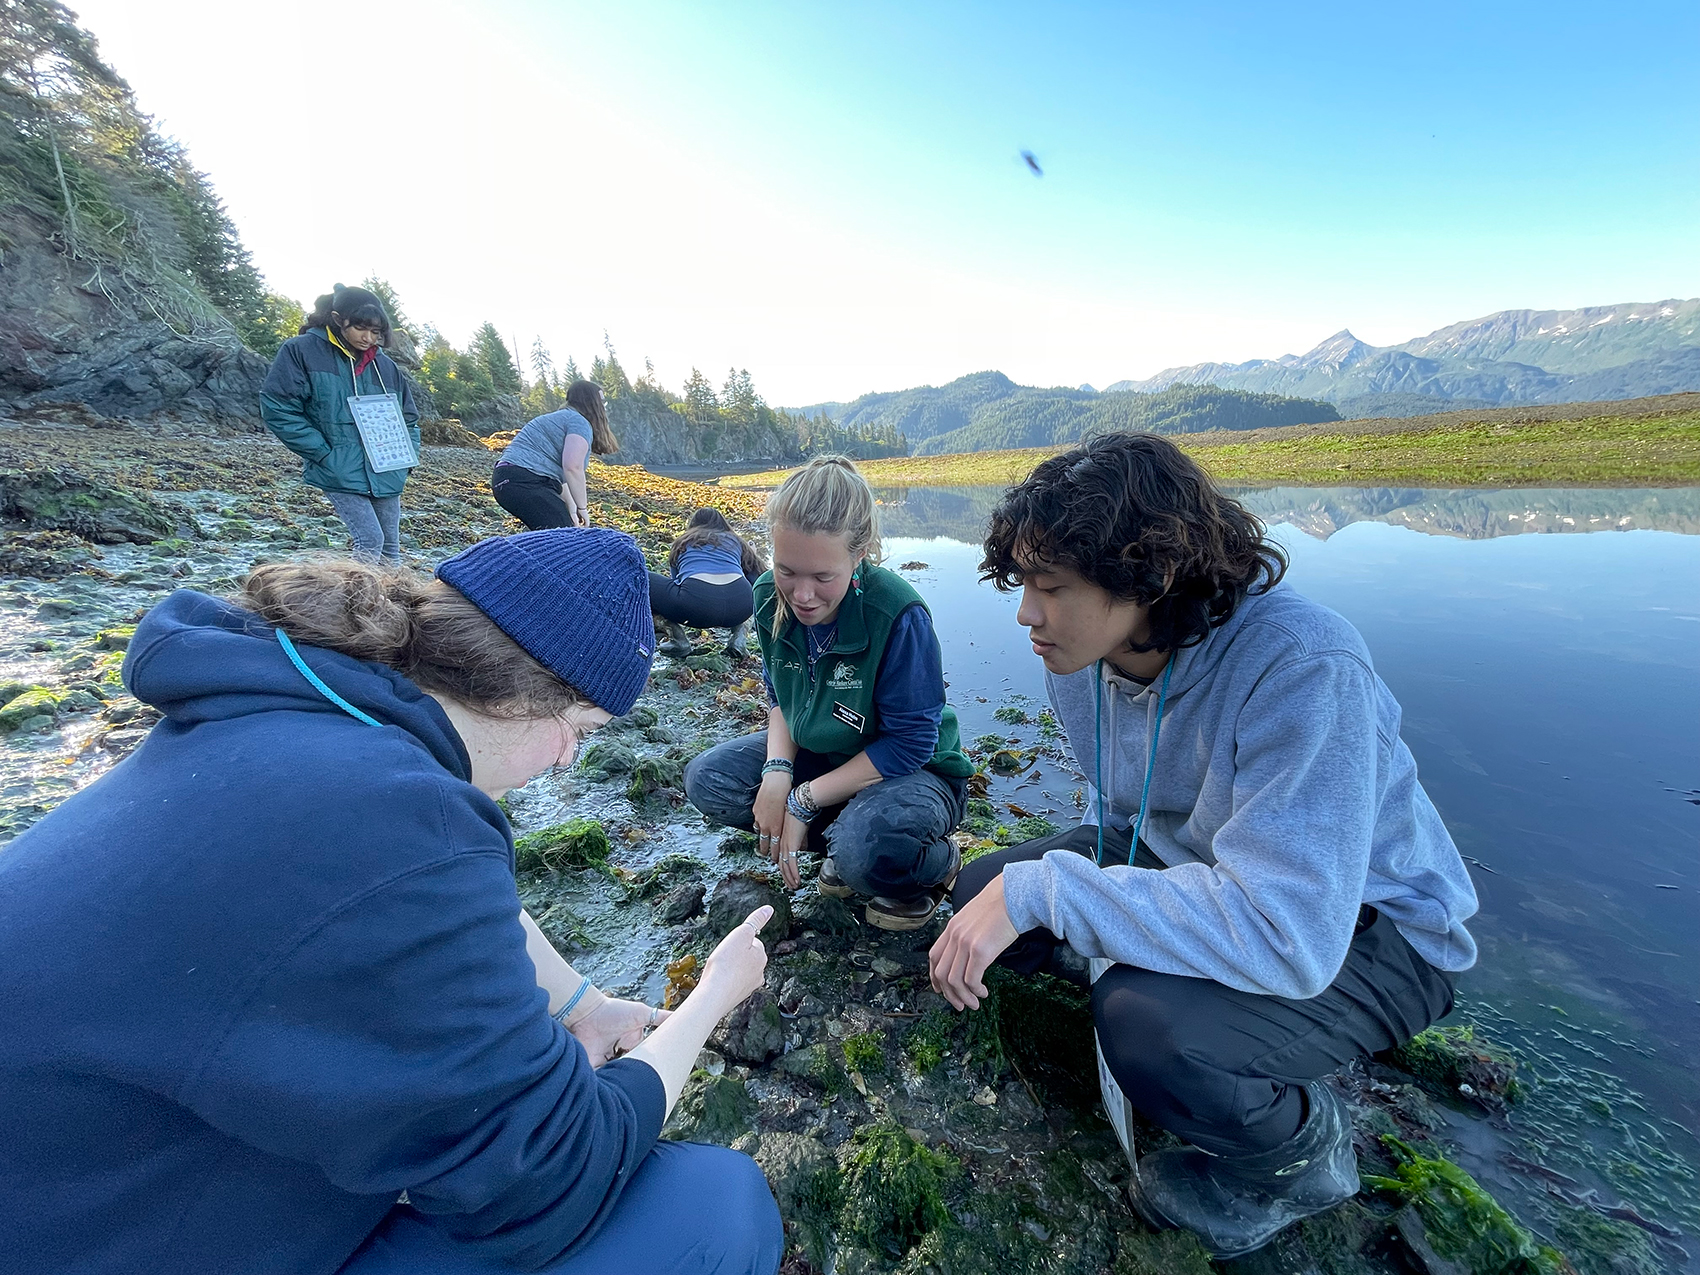 Students investigating water life in Alaska.